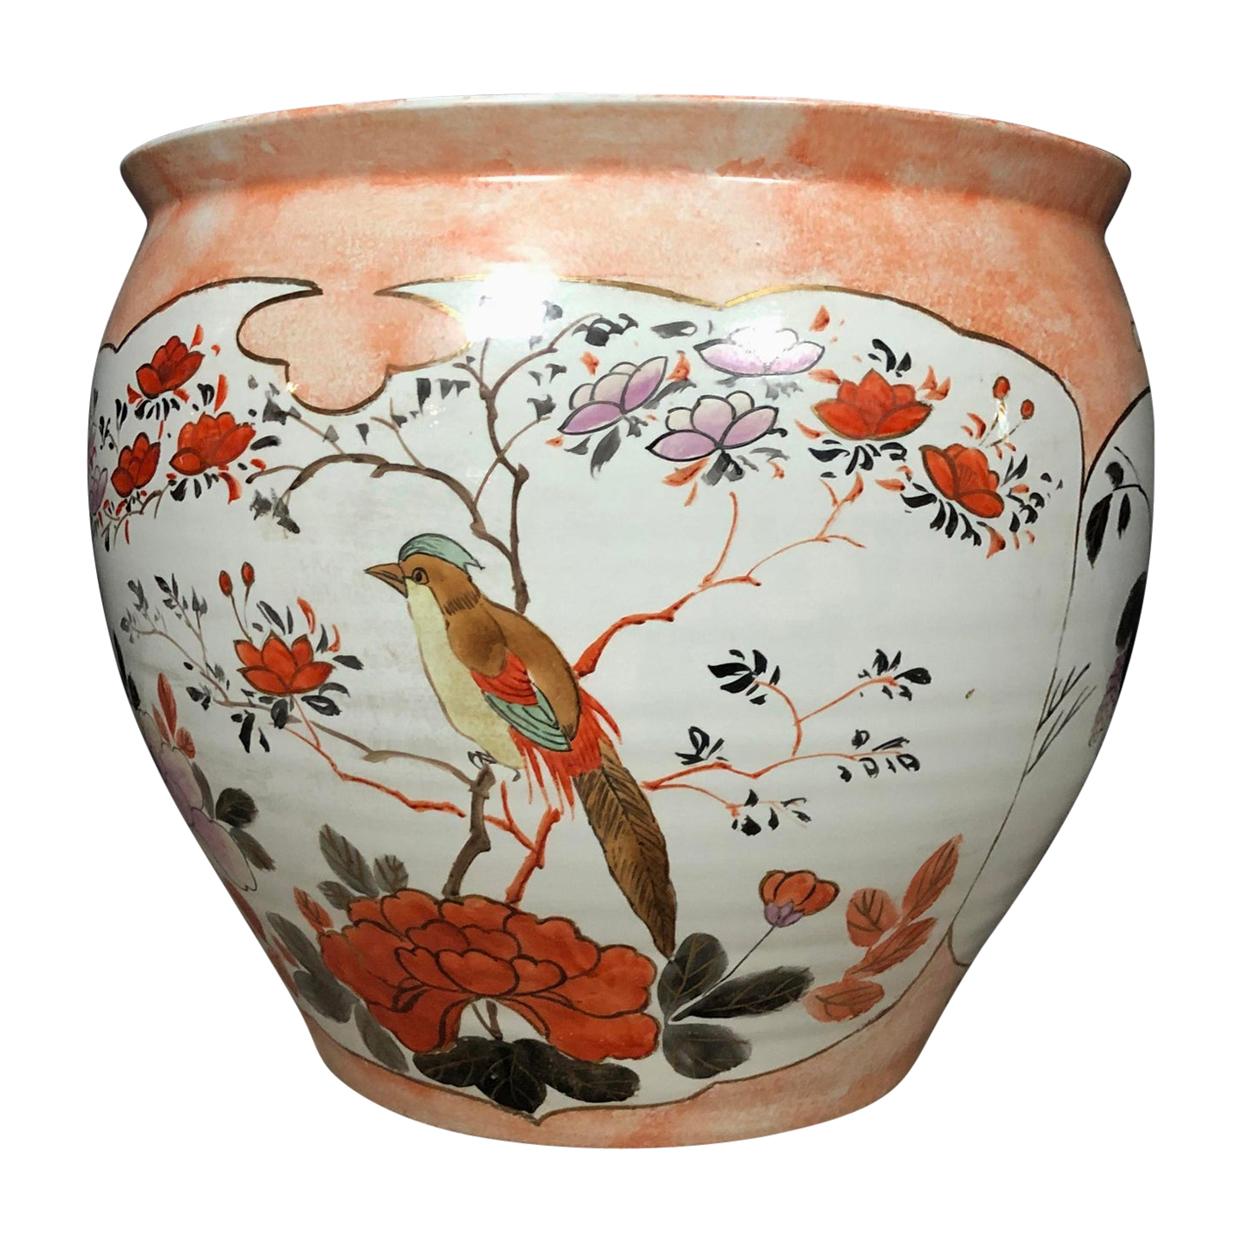 Vintage Orange and White Porcelain Japanese Fish Bowl Planter